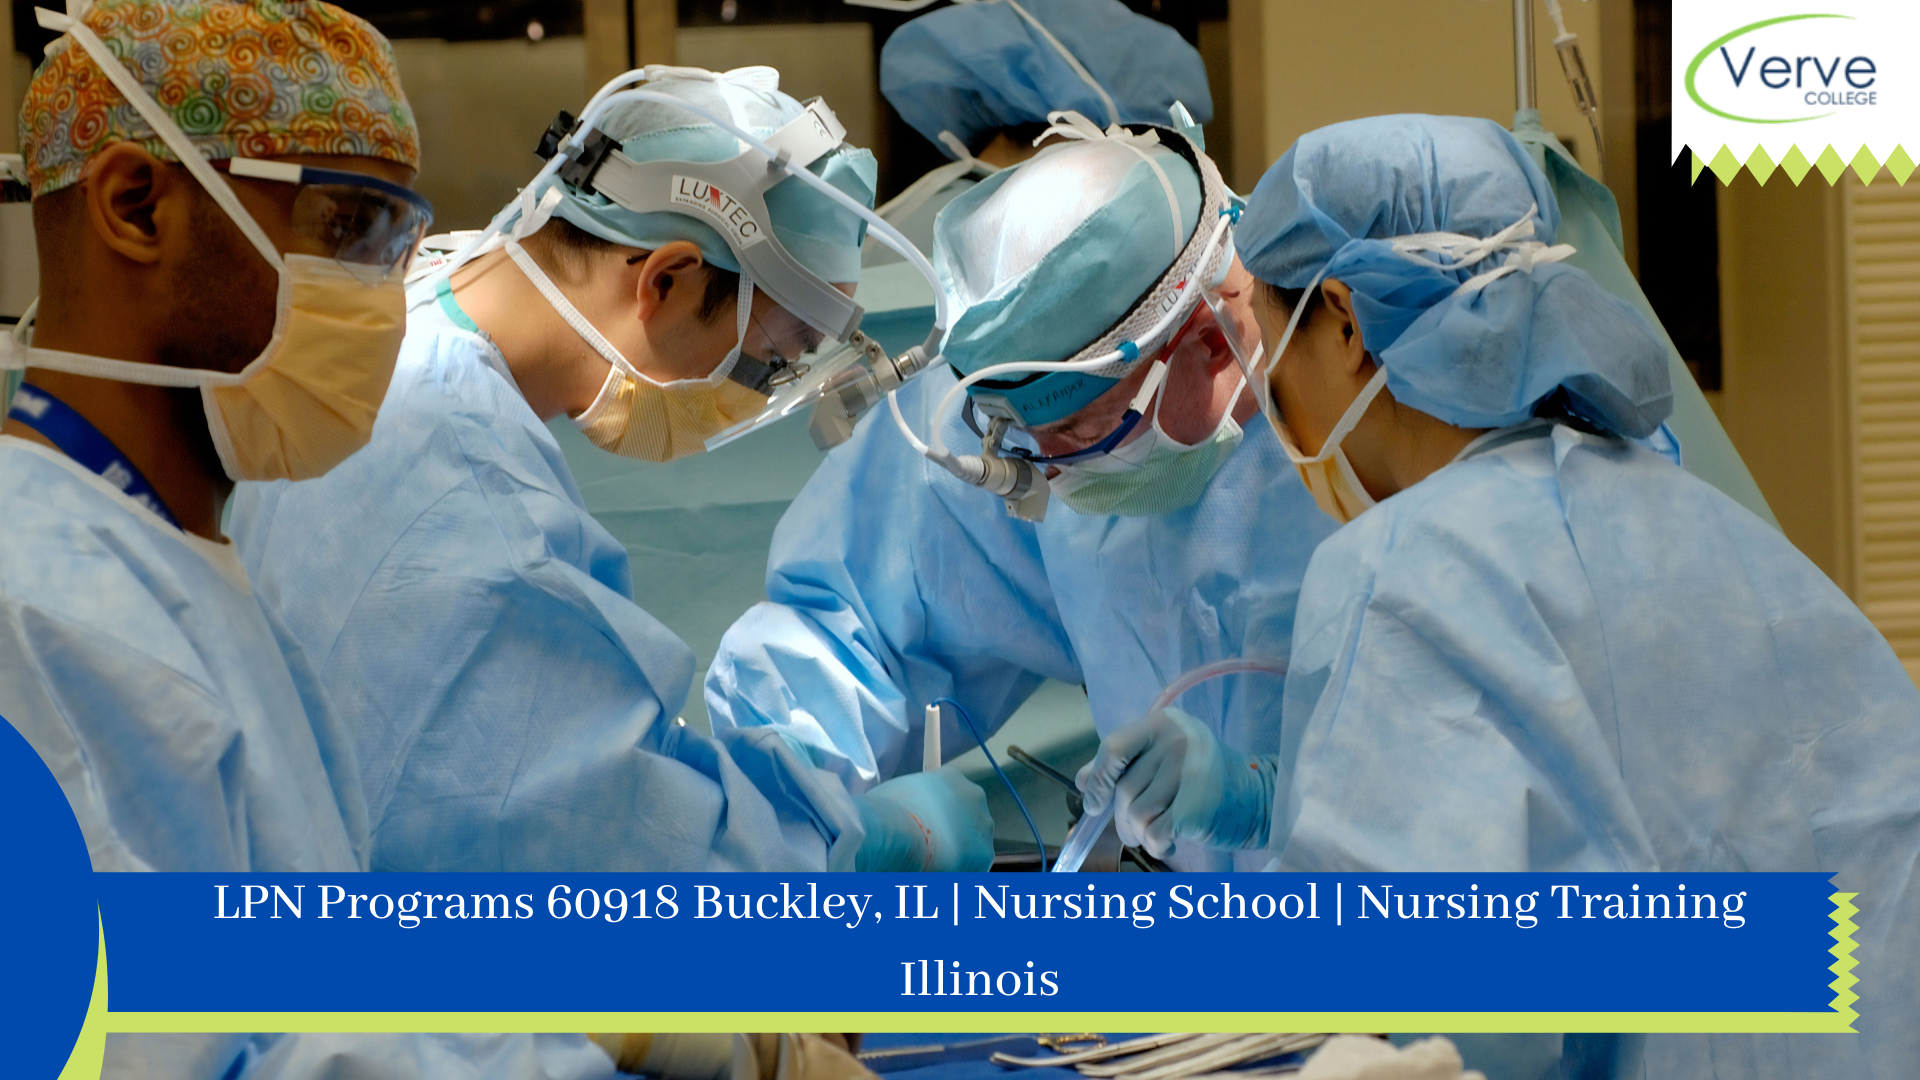 LPN Programs 60918 Buckley, IL | Nursing School | Nursing Training Illinois